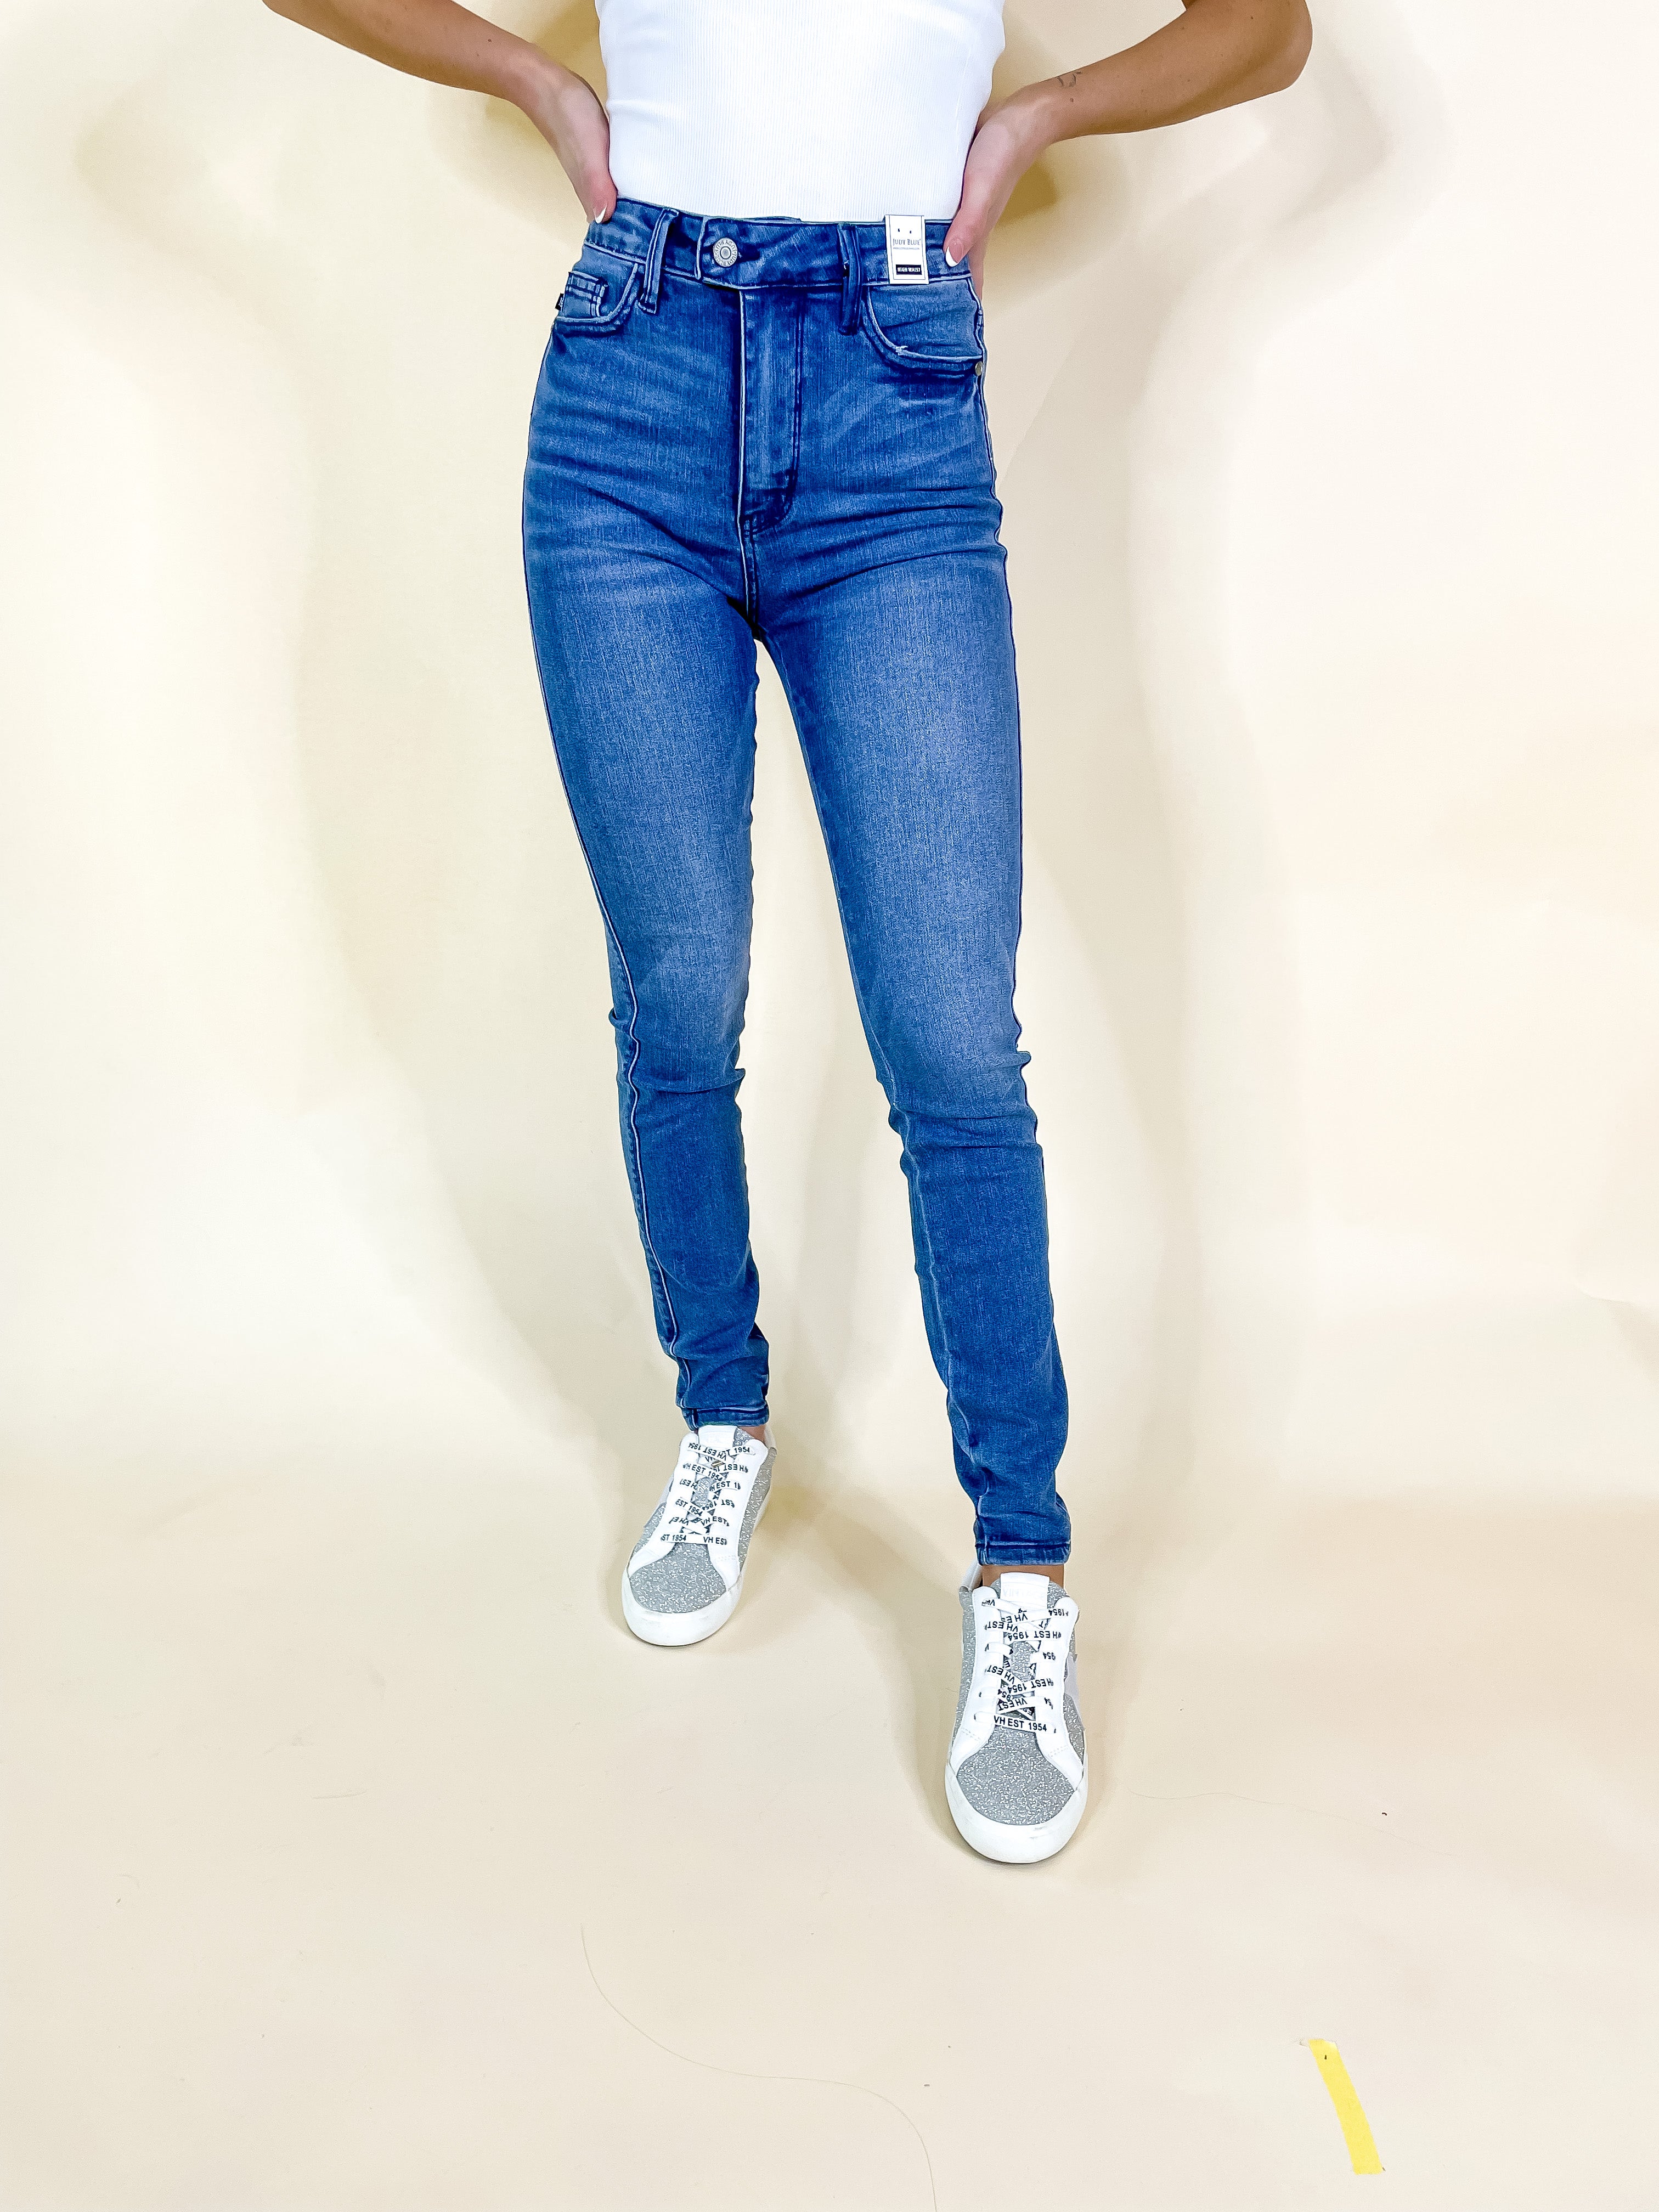 Judy Blue | Faithful Friend Control Top Skinny Jeans in Cool Medium Wash